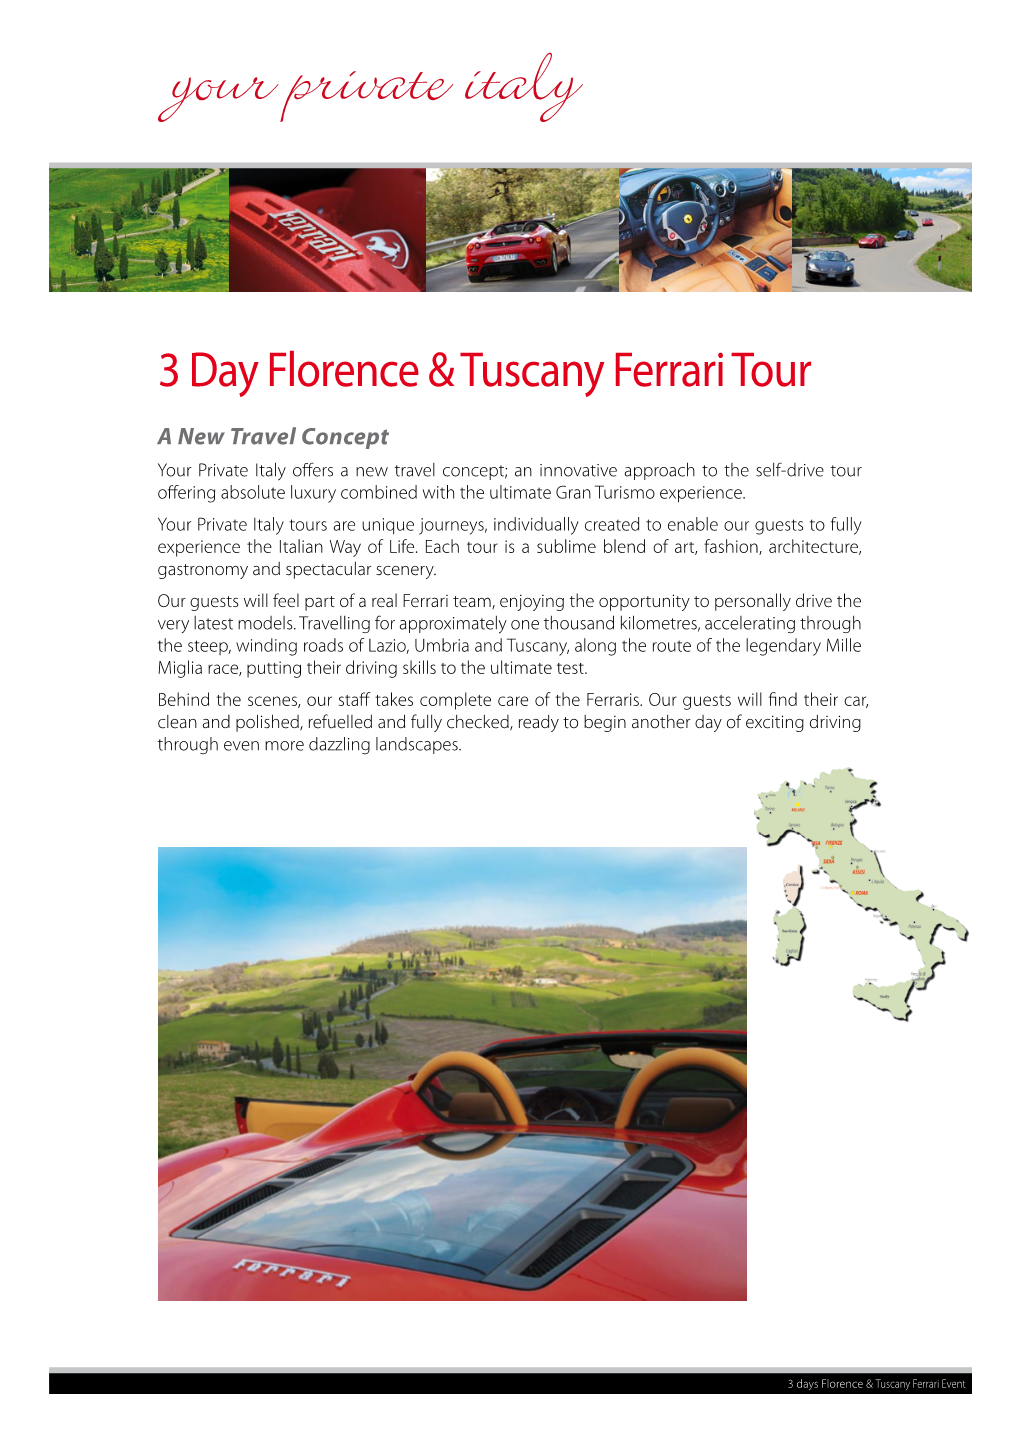 3 Day Florence & Tuscany Ferrari Tour